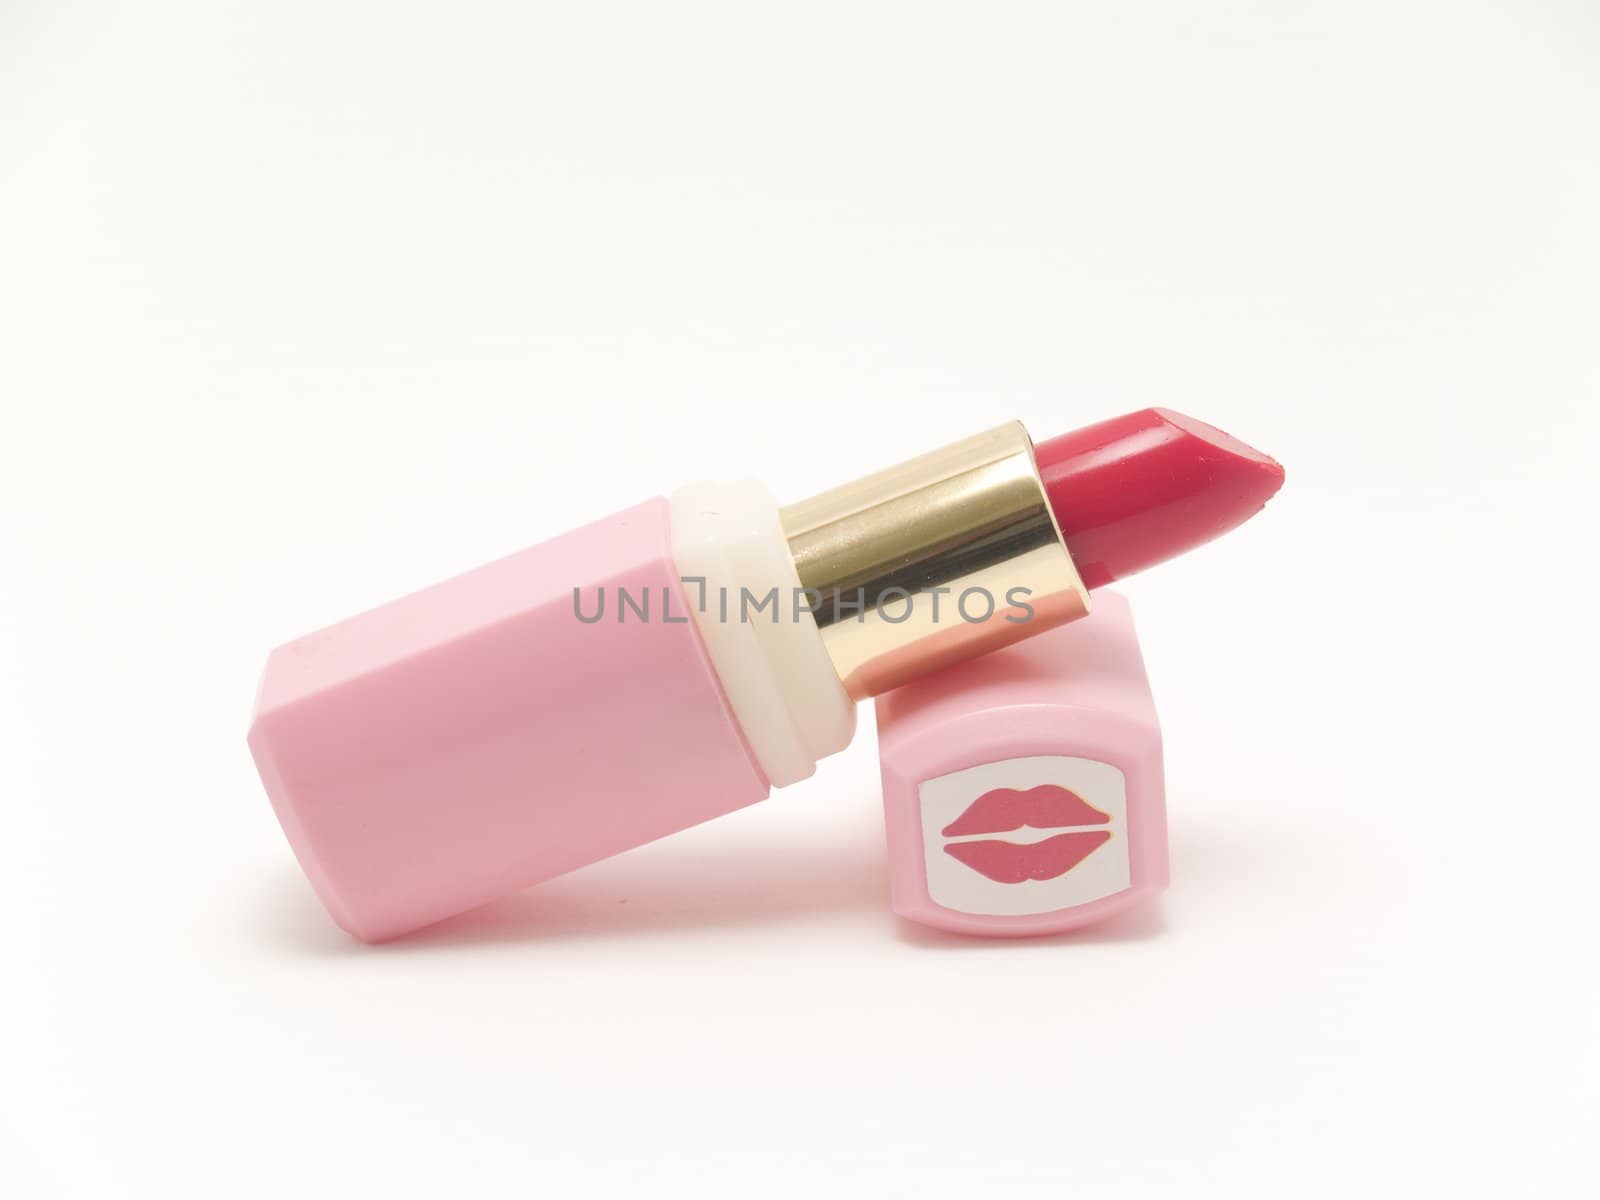  lipstick